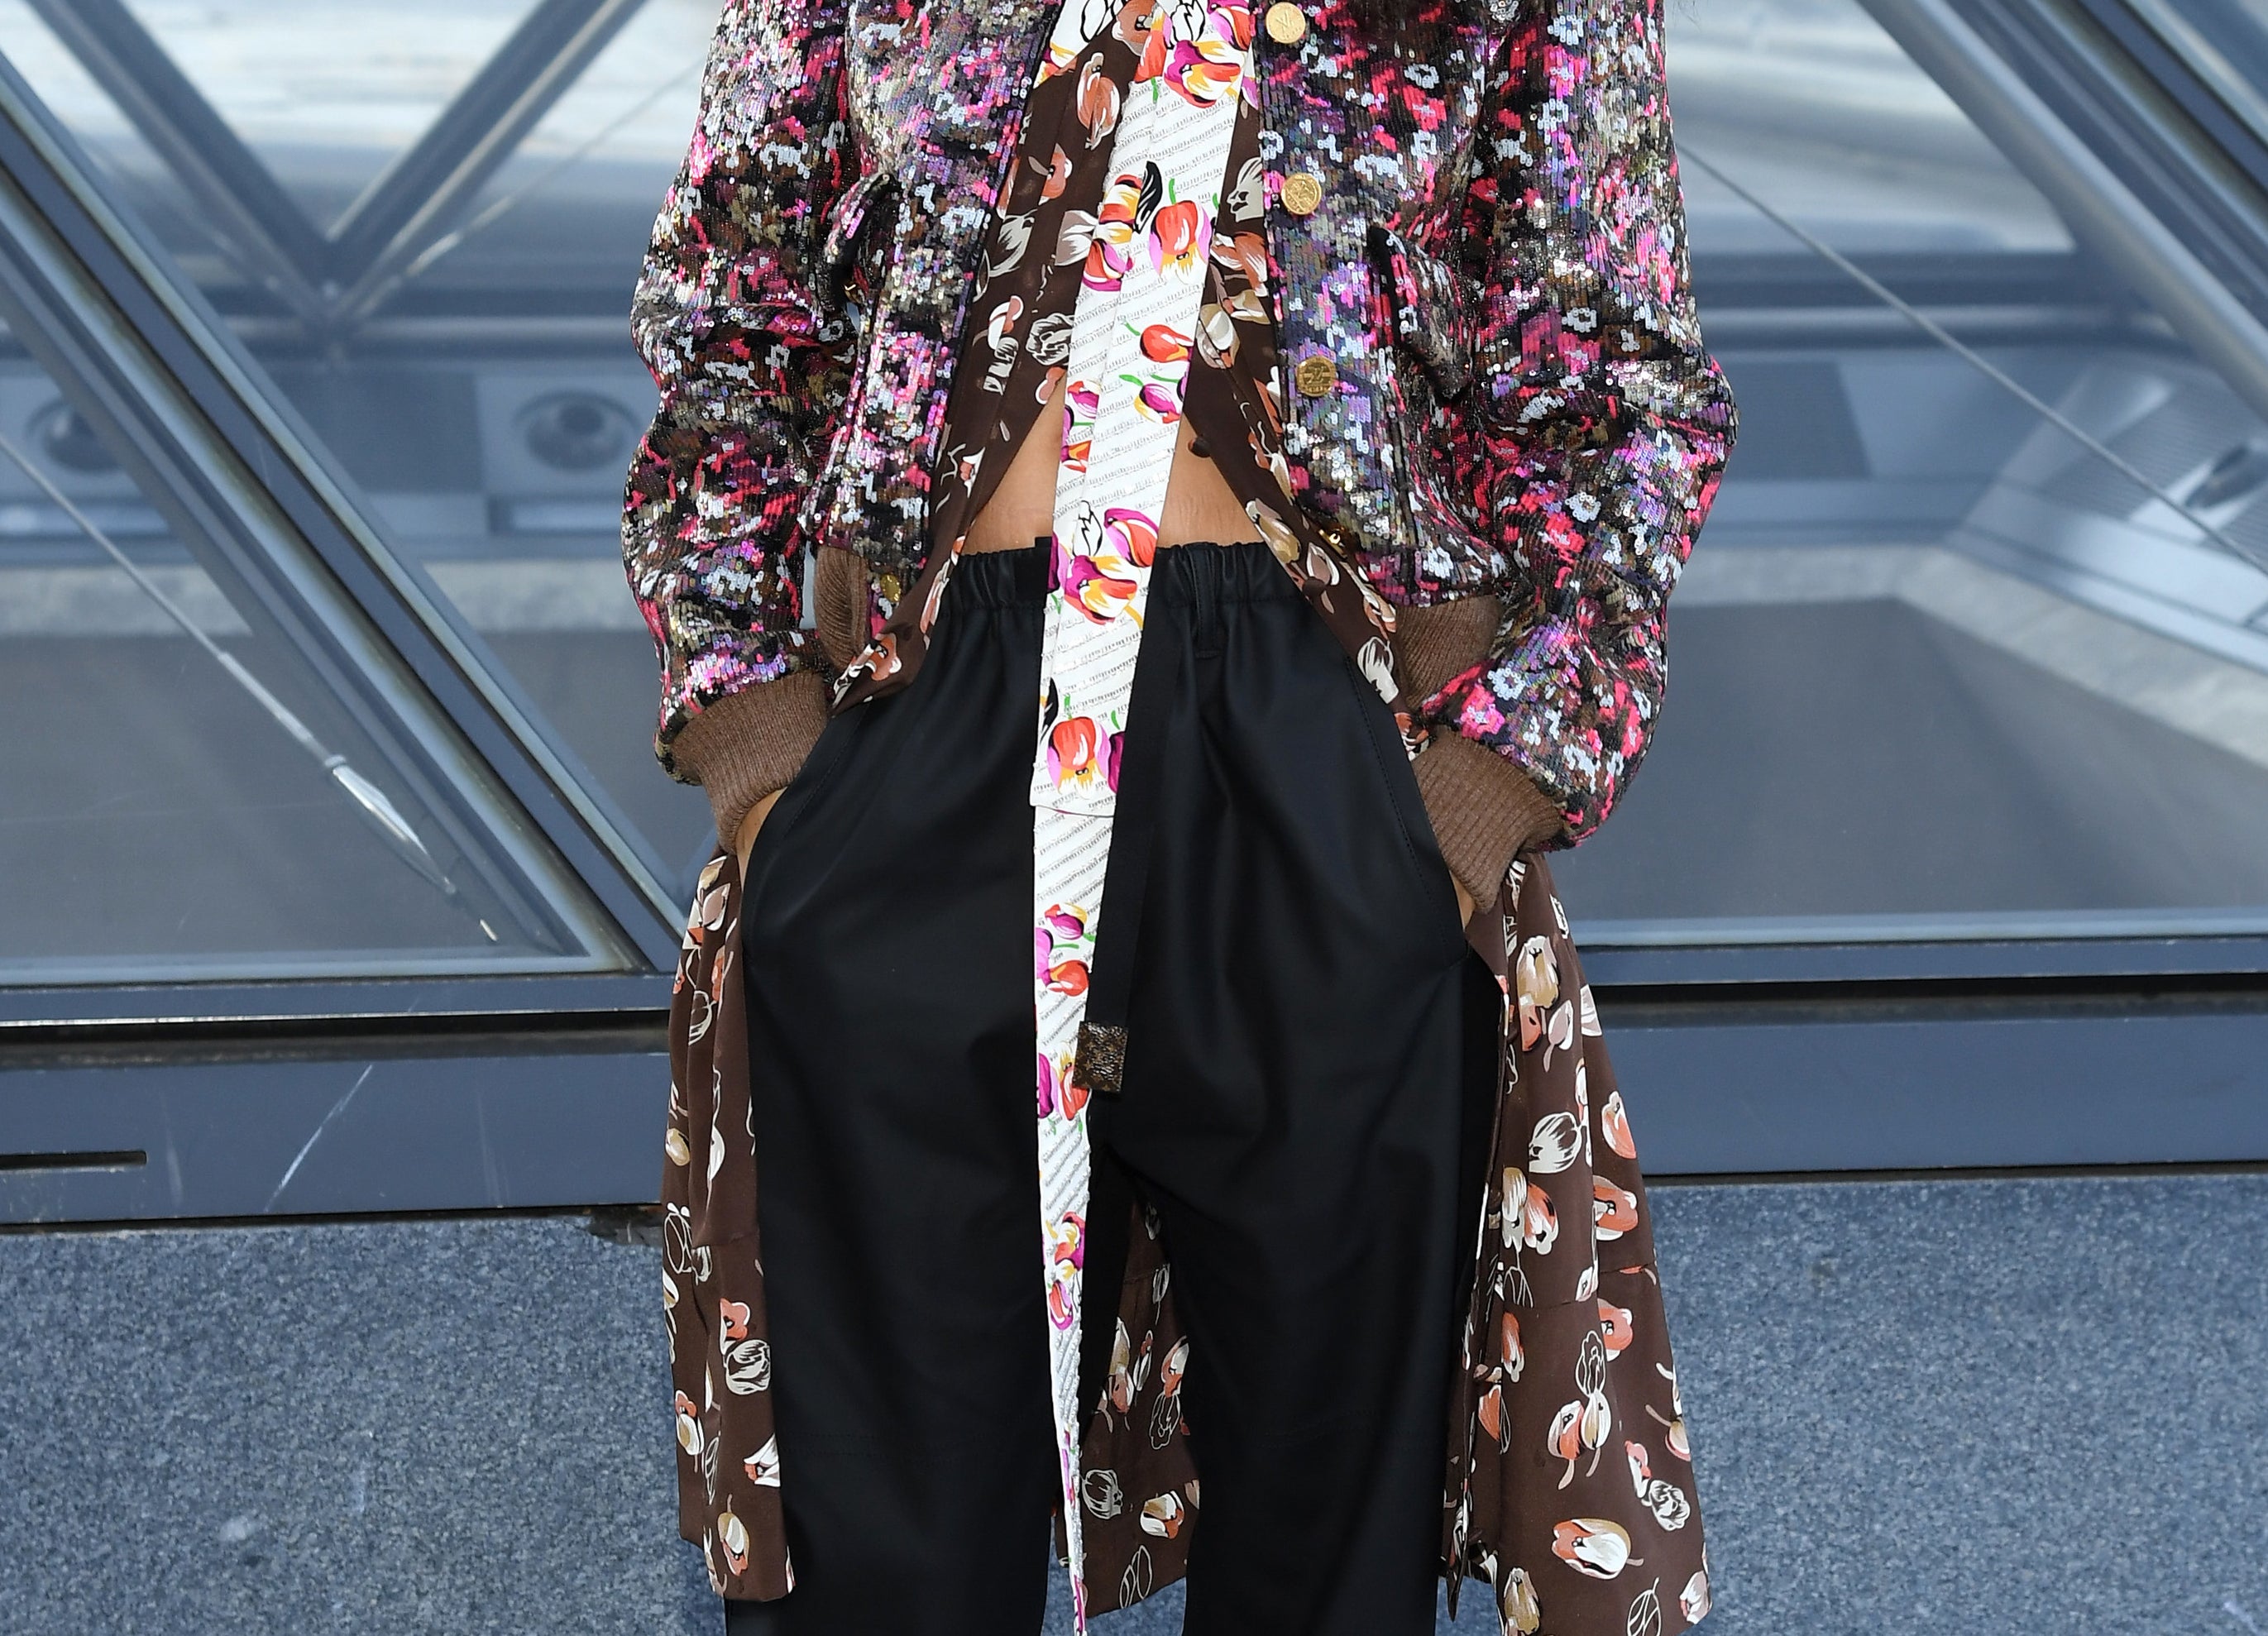 Thandiwe attends a fashion show